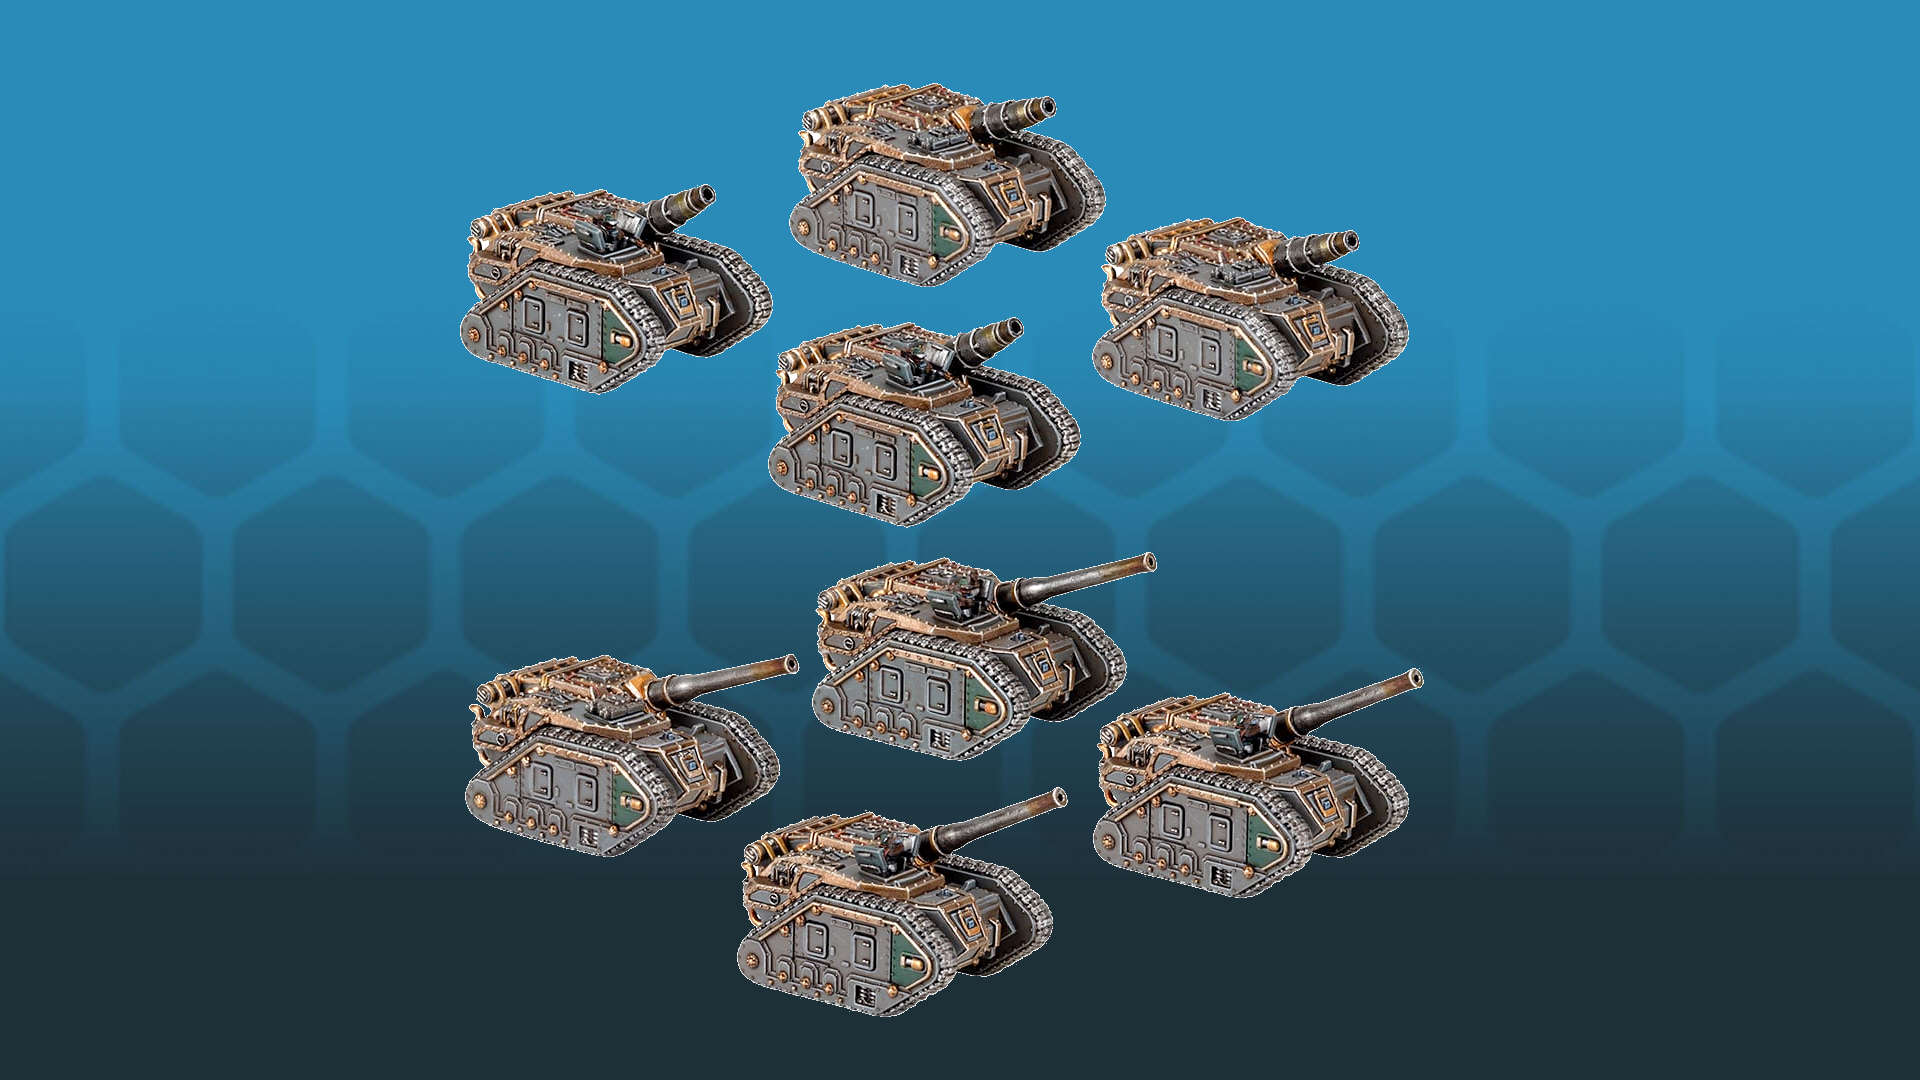 Warhammer The Horus Heresy Legions Imperialis model tanks - teeny tiny versions of the Warhammer 40k Basilisk and Medusa artillery tnks